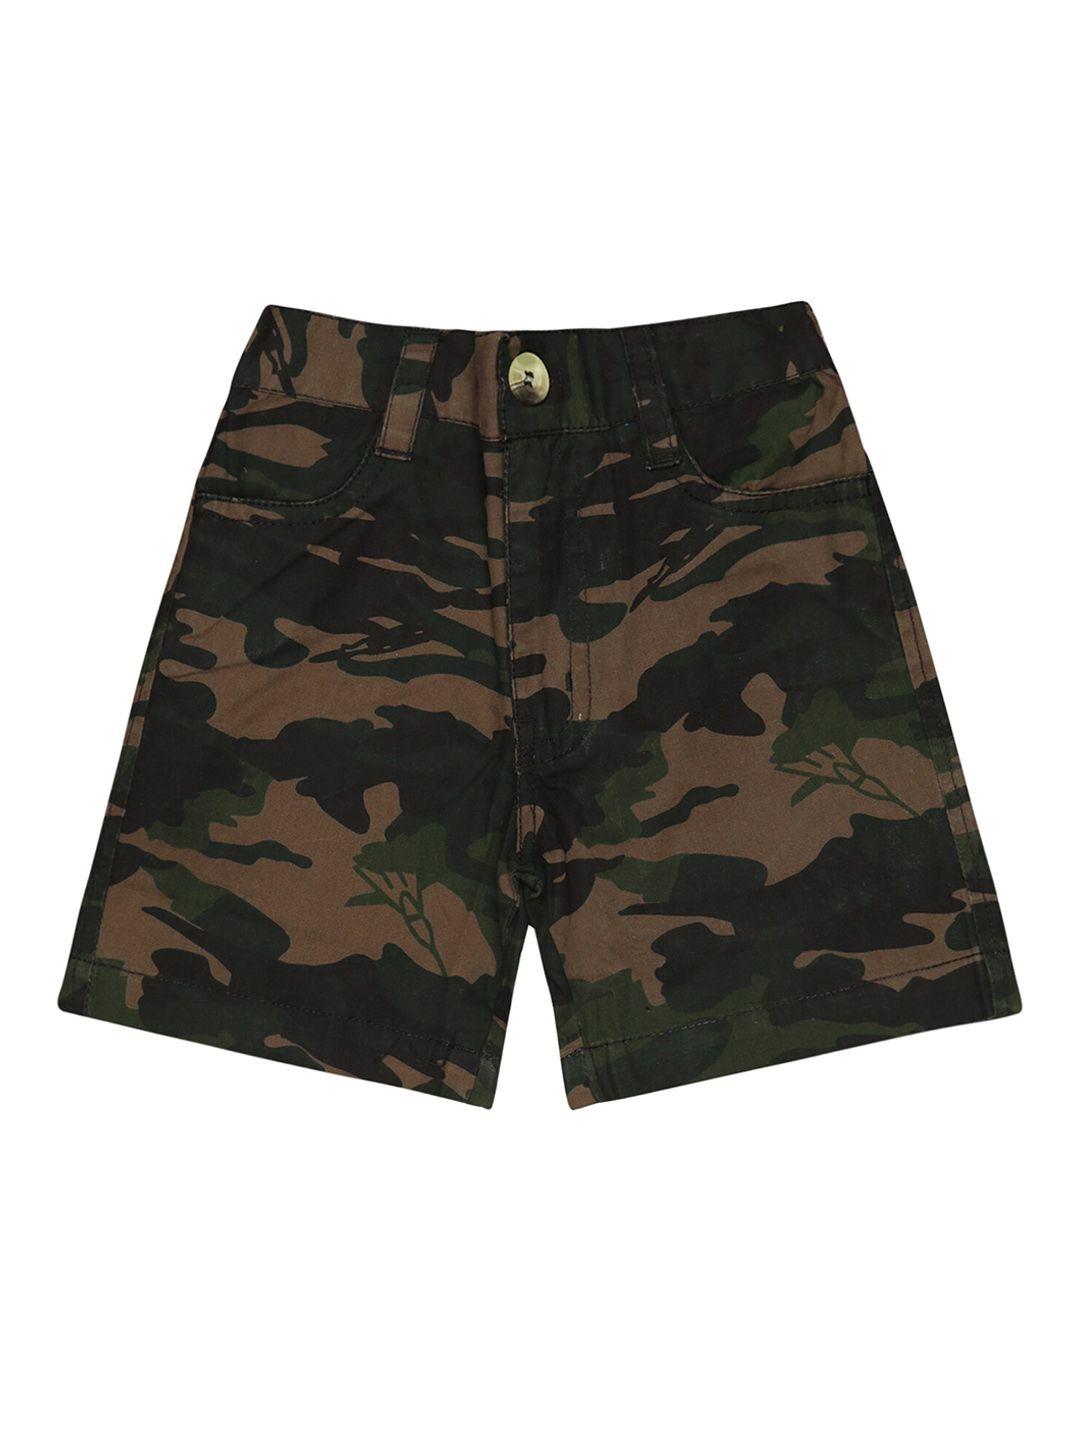 bodycare kids boys camouflage printed shorts